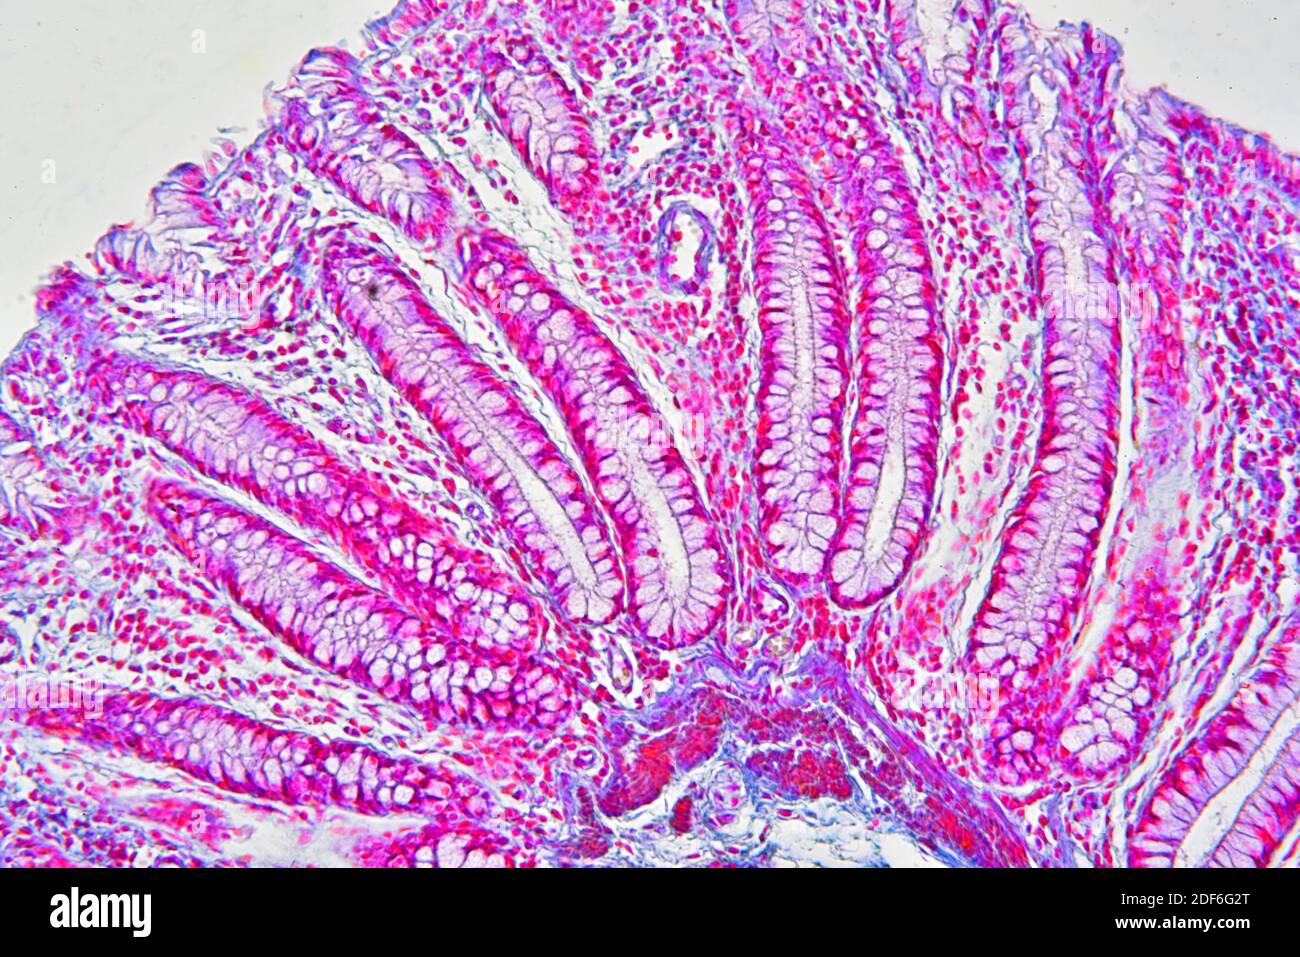 Human colon showing epithelium, mucosa, submucosa, intestinal glands and villi. Optical microscope X100. Stock Photo